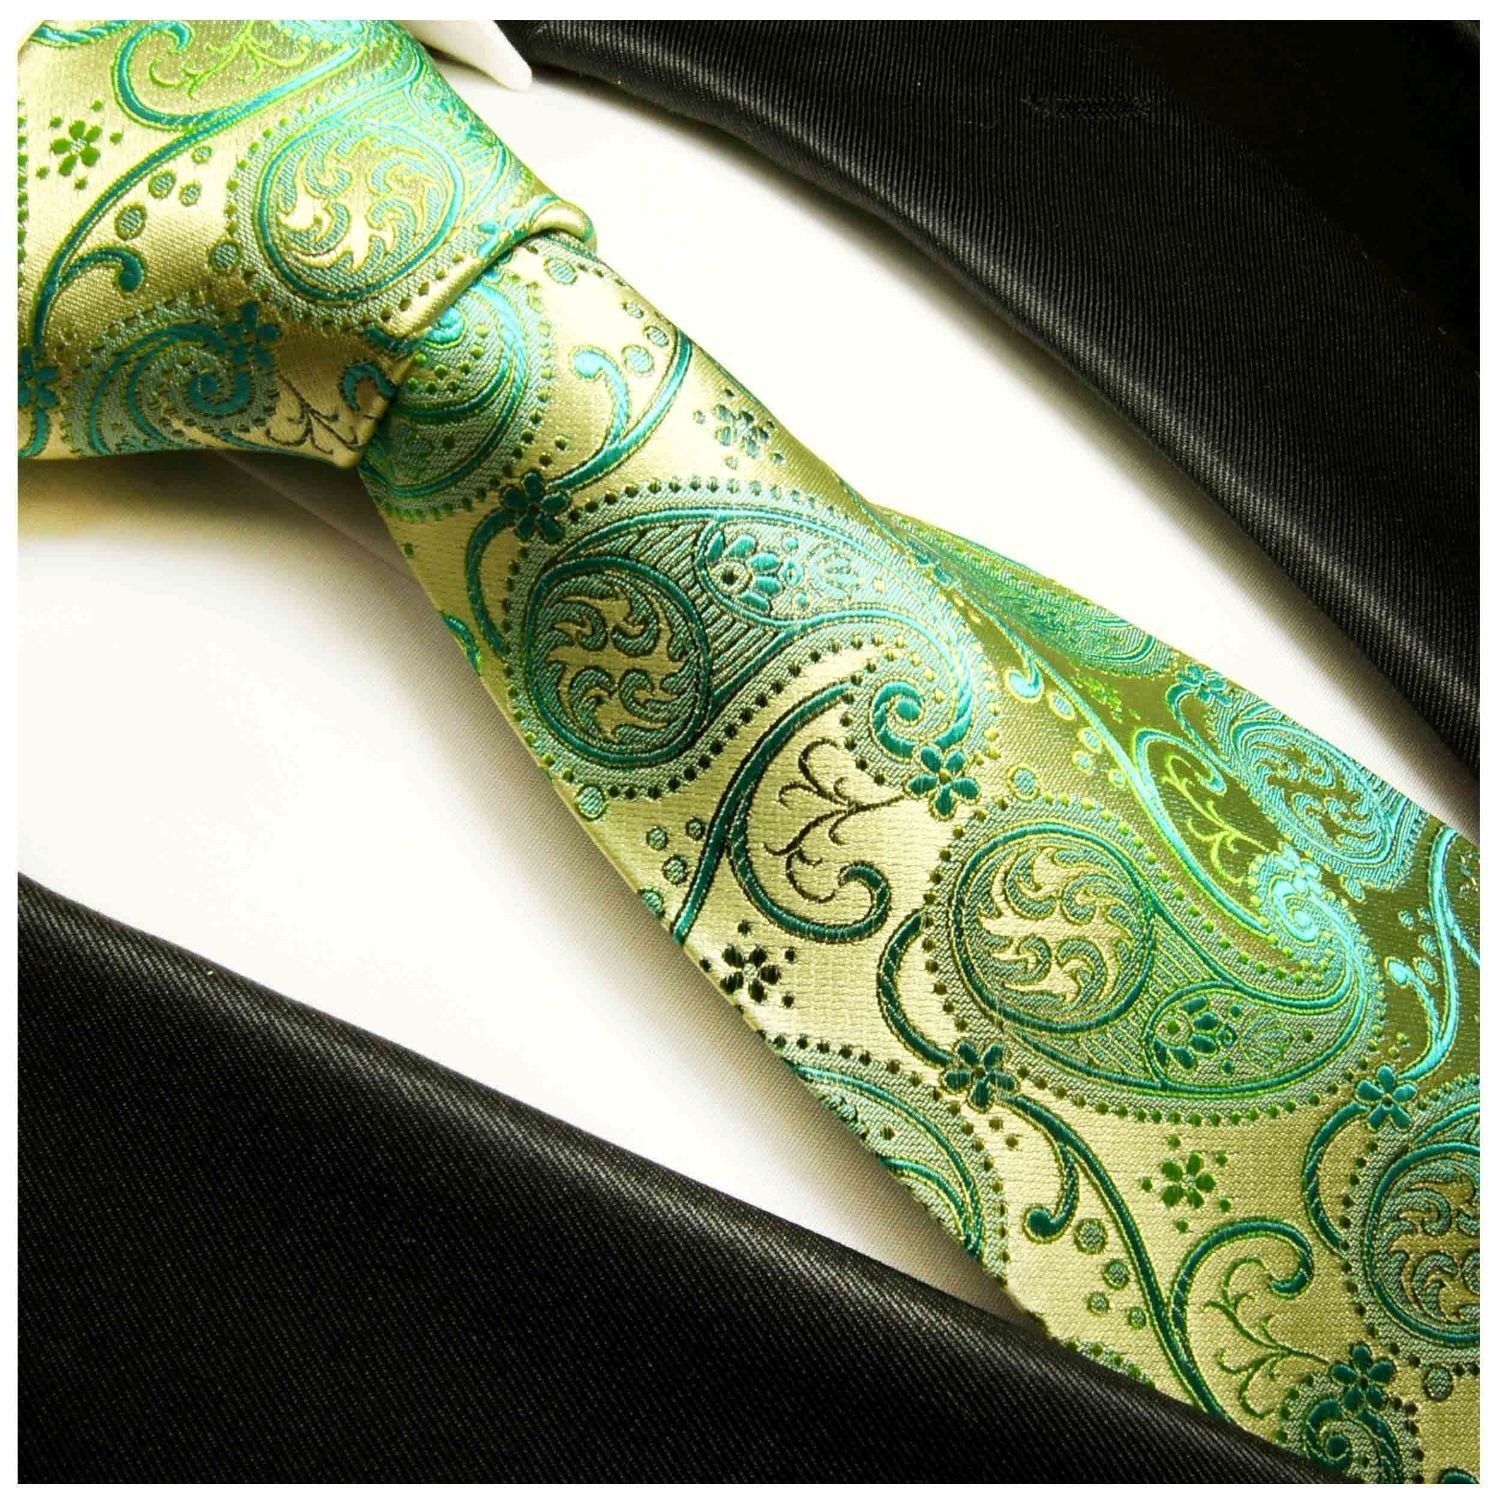 Paul Malone Krawatte Elegante Seidenkrawatte brokat gold Herren Schlips 817 Schmal (165cm), paisley grün (6cm), lang Seide Extra 100